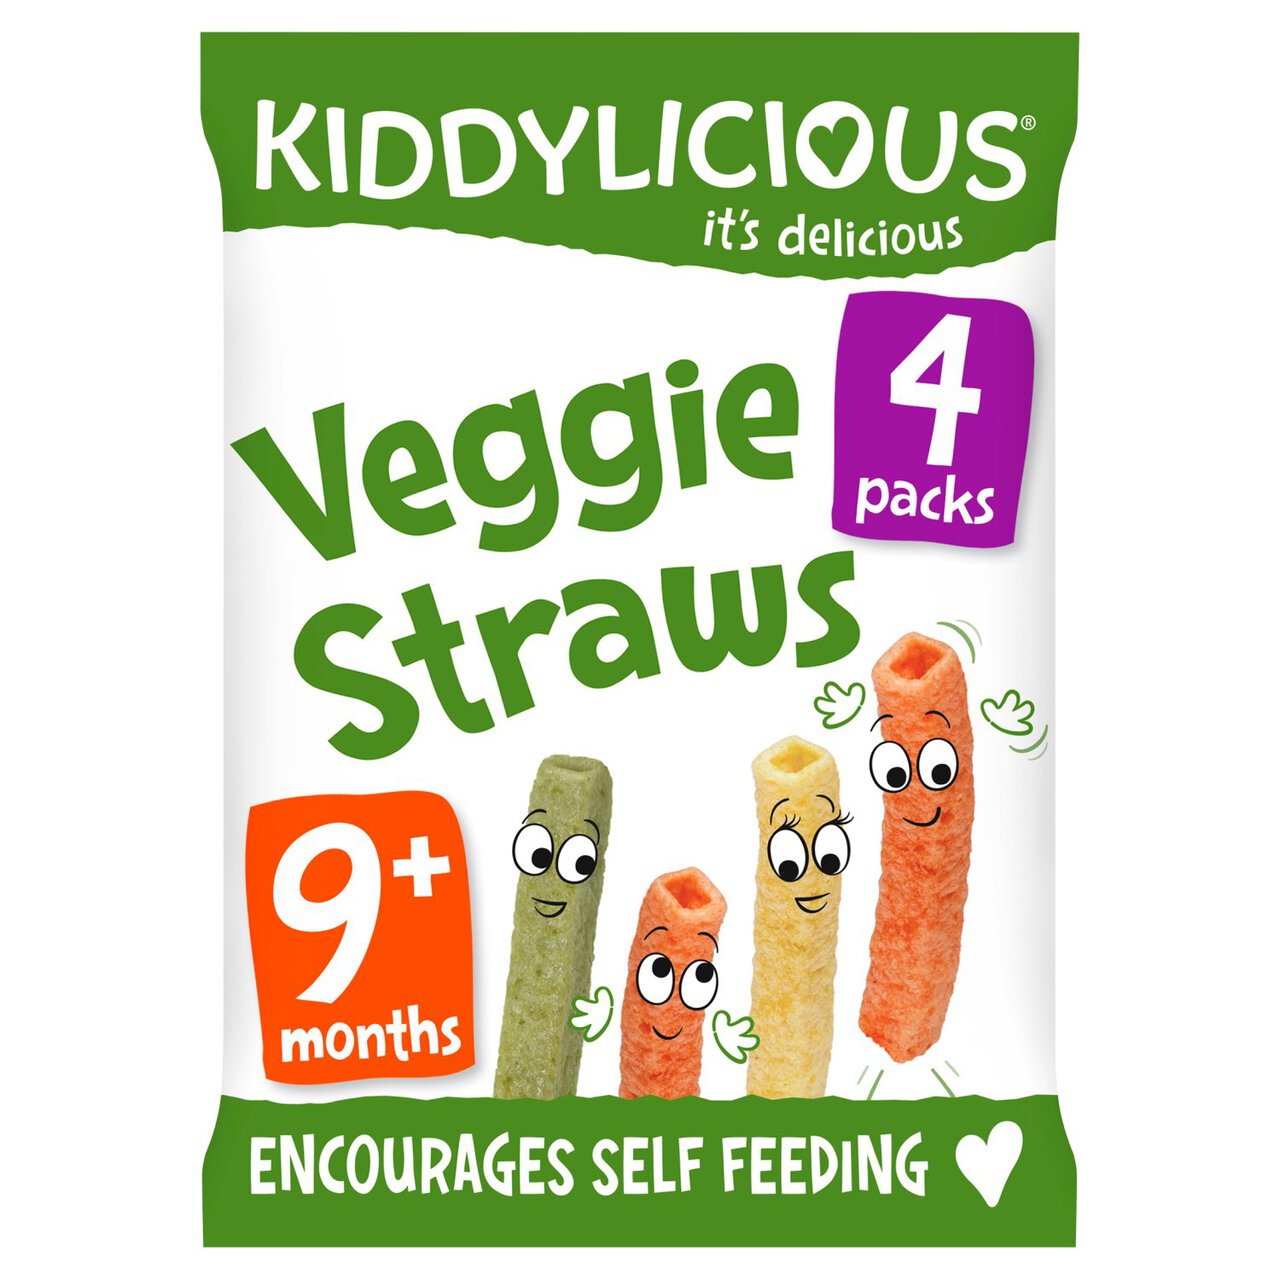 Kiddylicious Veggie Straws, 9 mths+ Multipack 4 x 12g